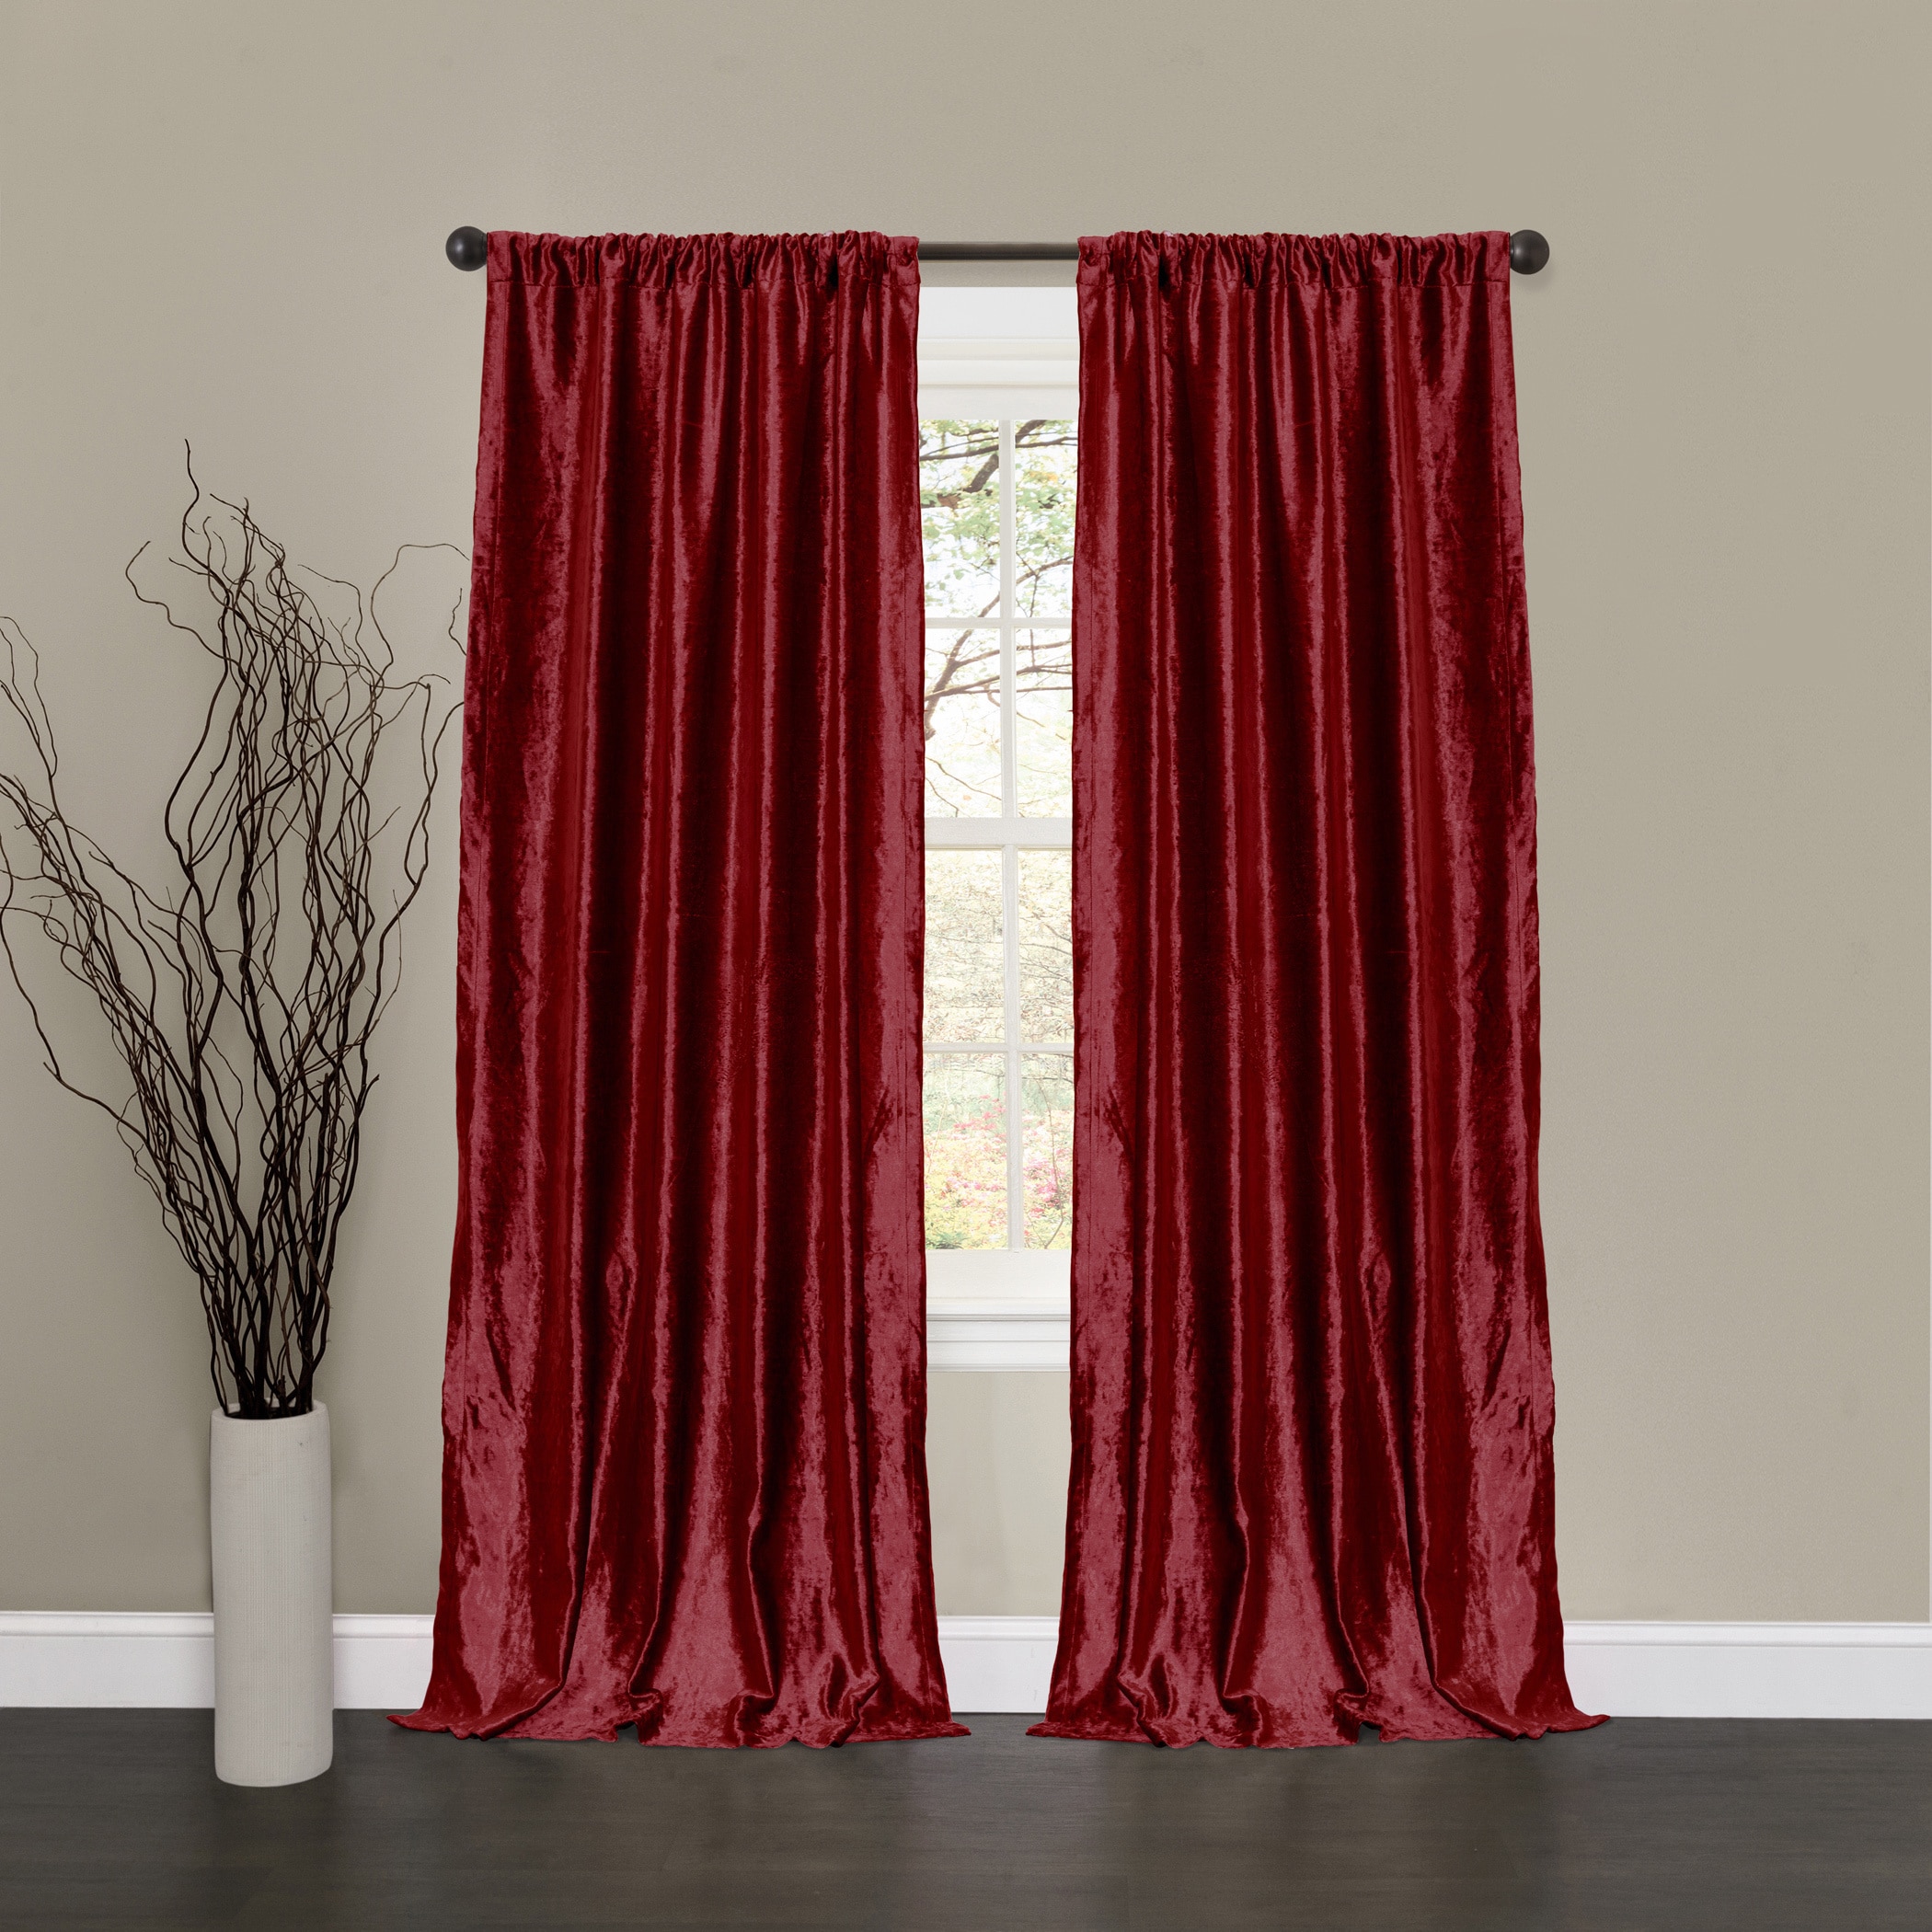 Lush Decor Velvet Dreams Peppermint 84 inch Curtain Panel Pair